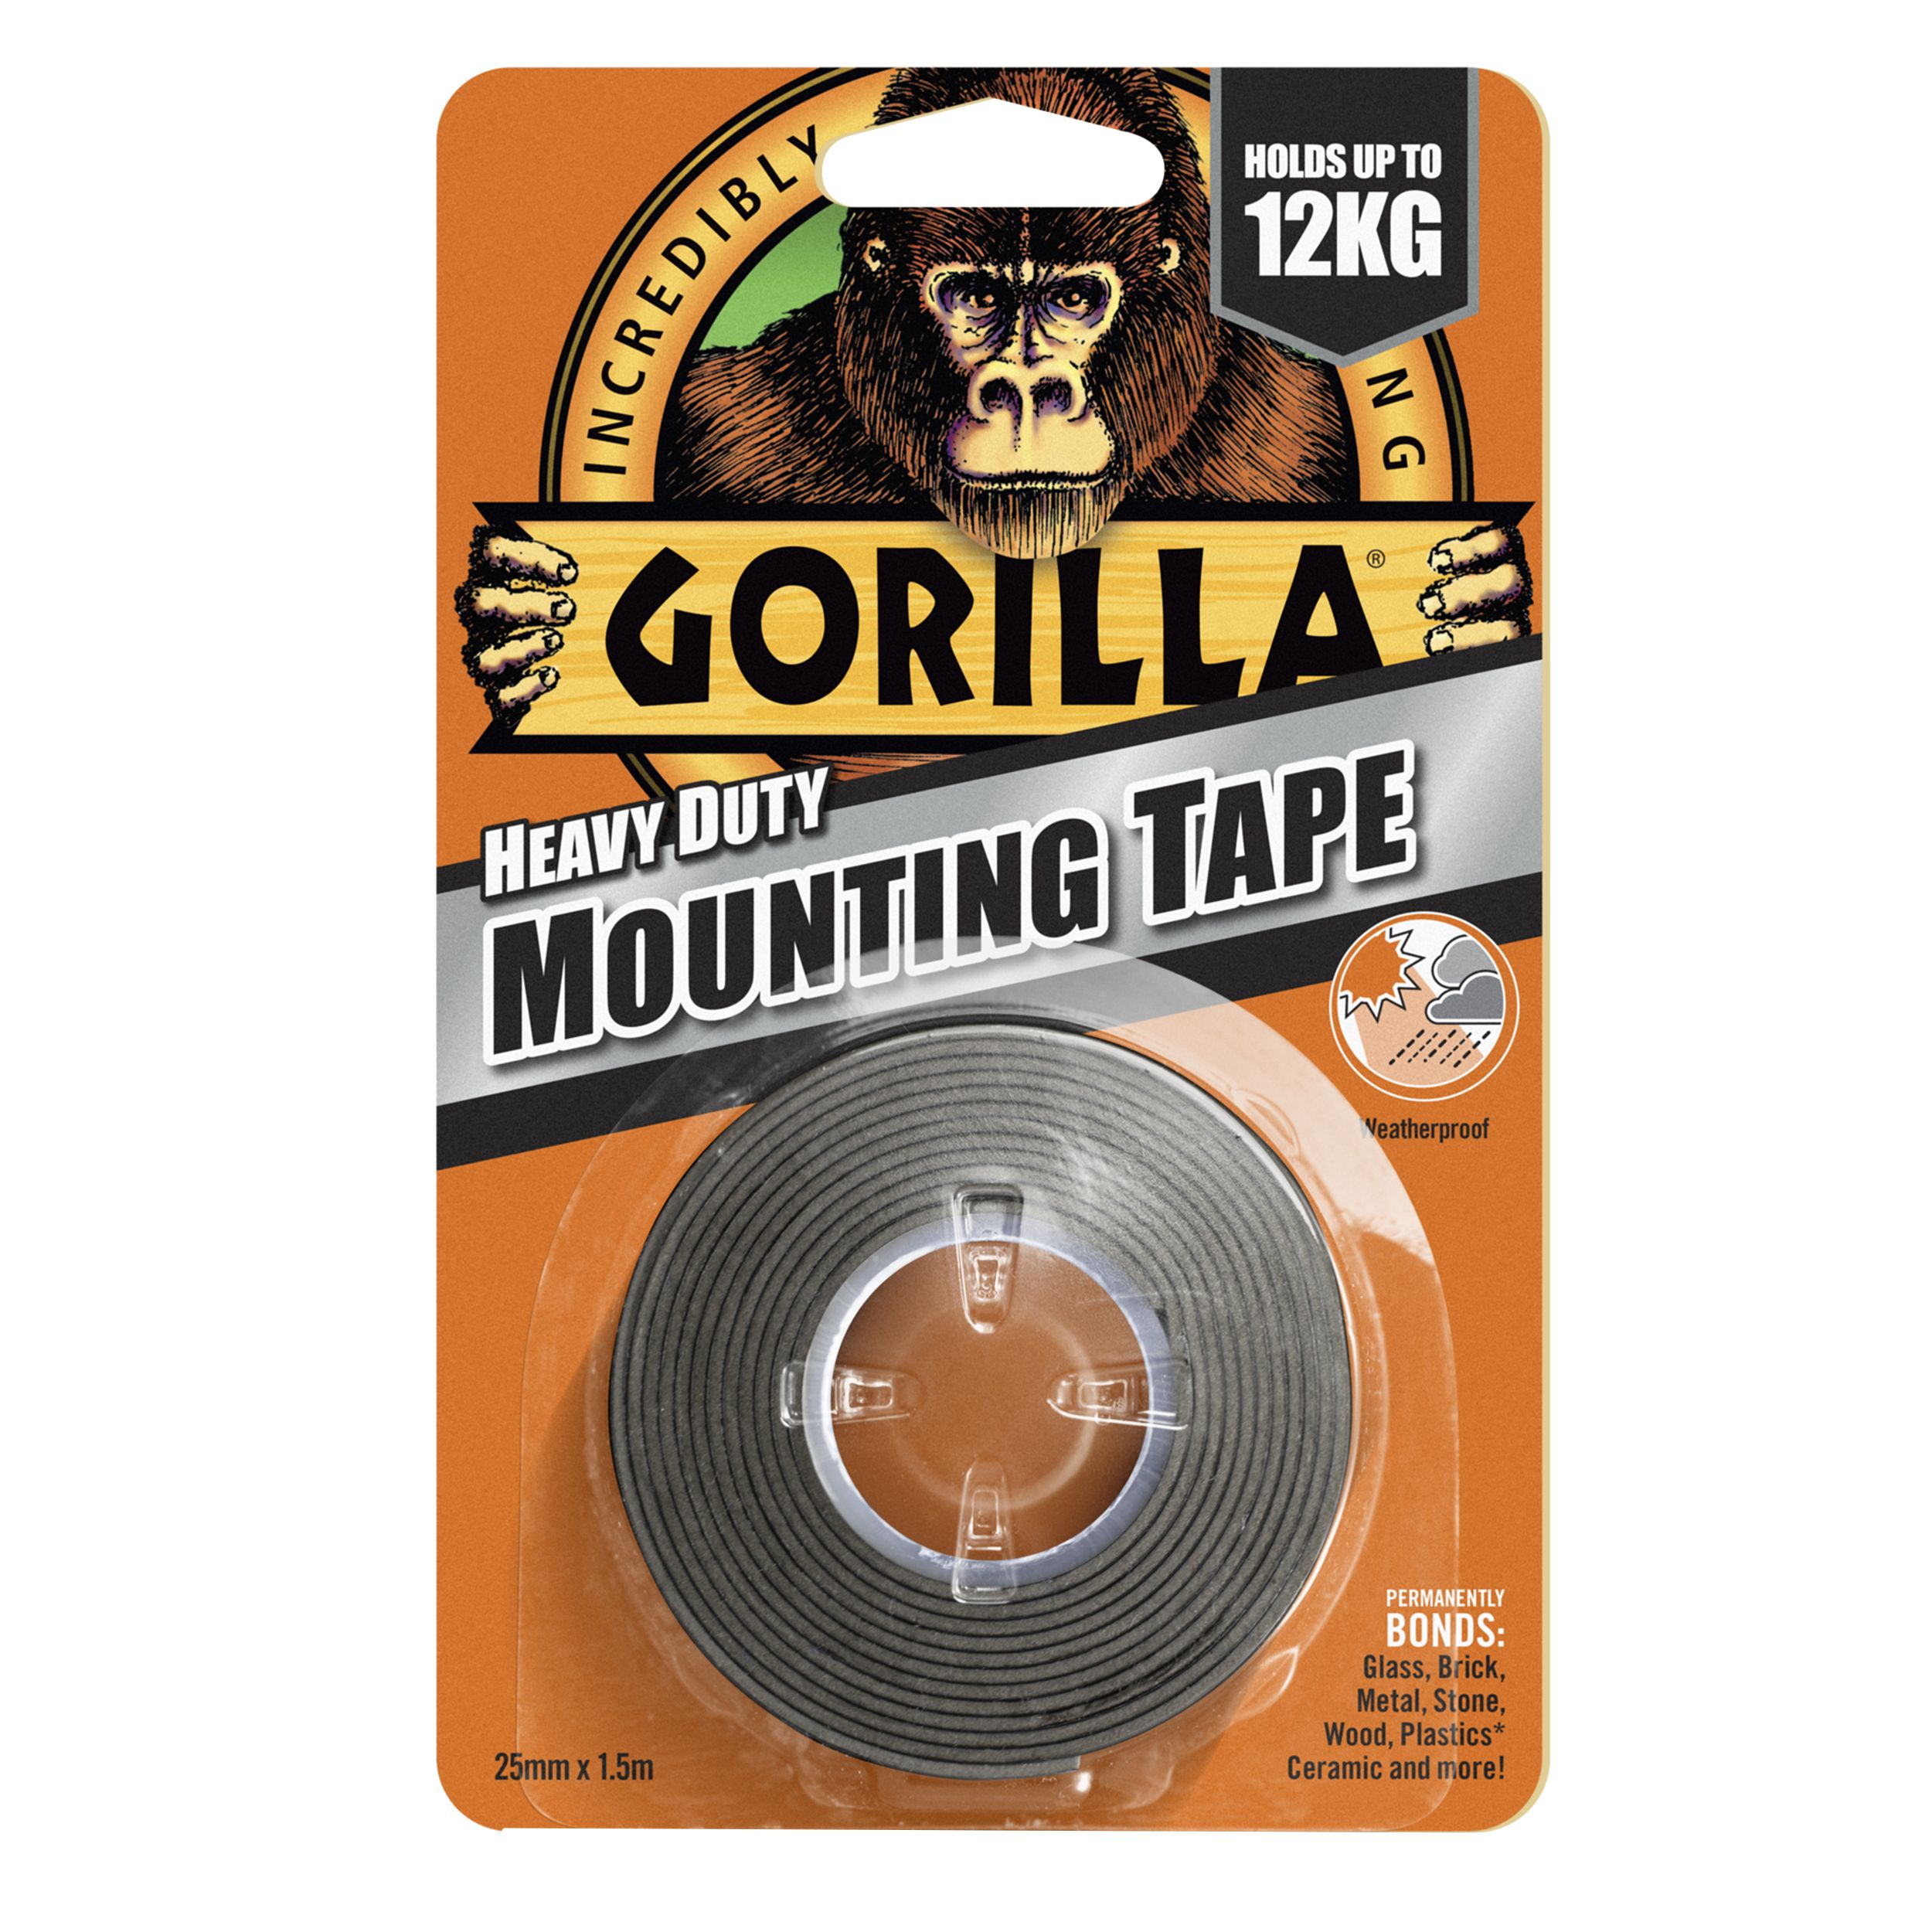 Gorilla - Heavy Duty Double Sided Mounting Tape, Weatherproof, 1 x 60,  Black, (Pack of 1)